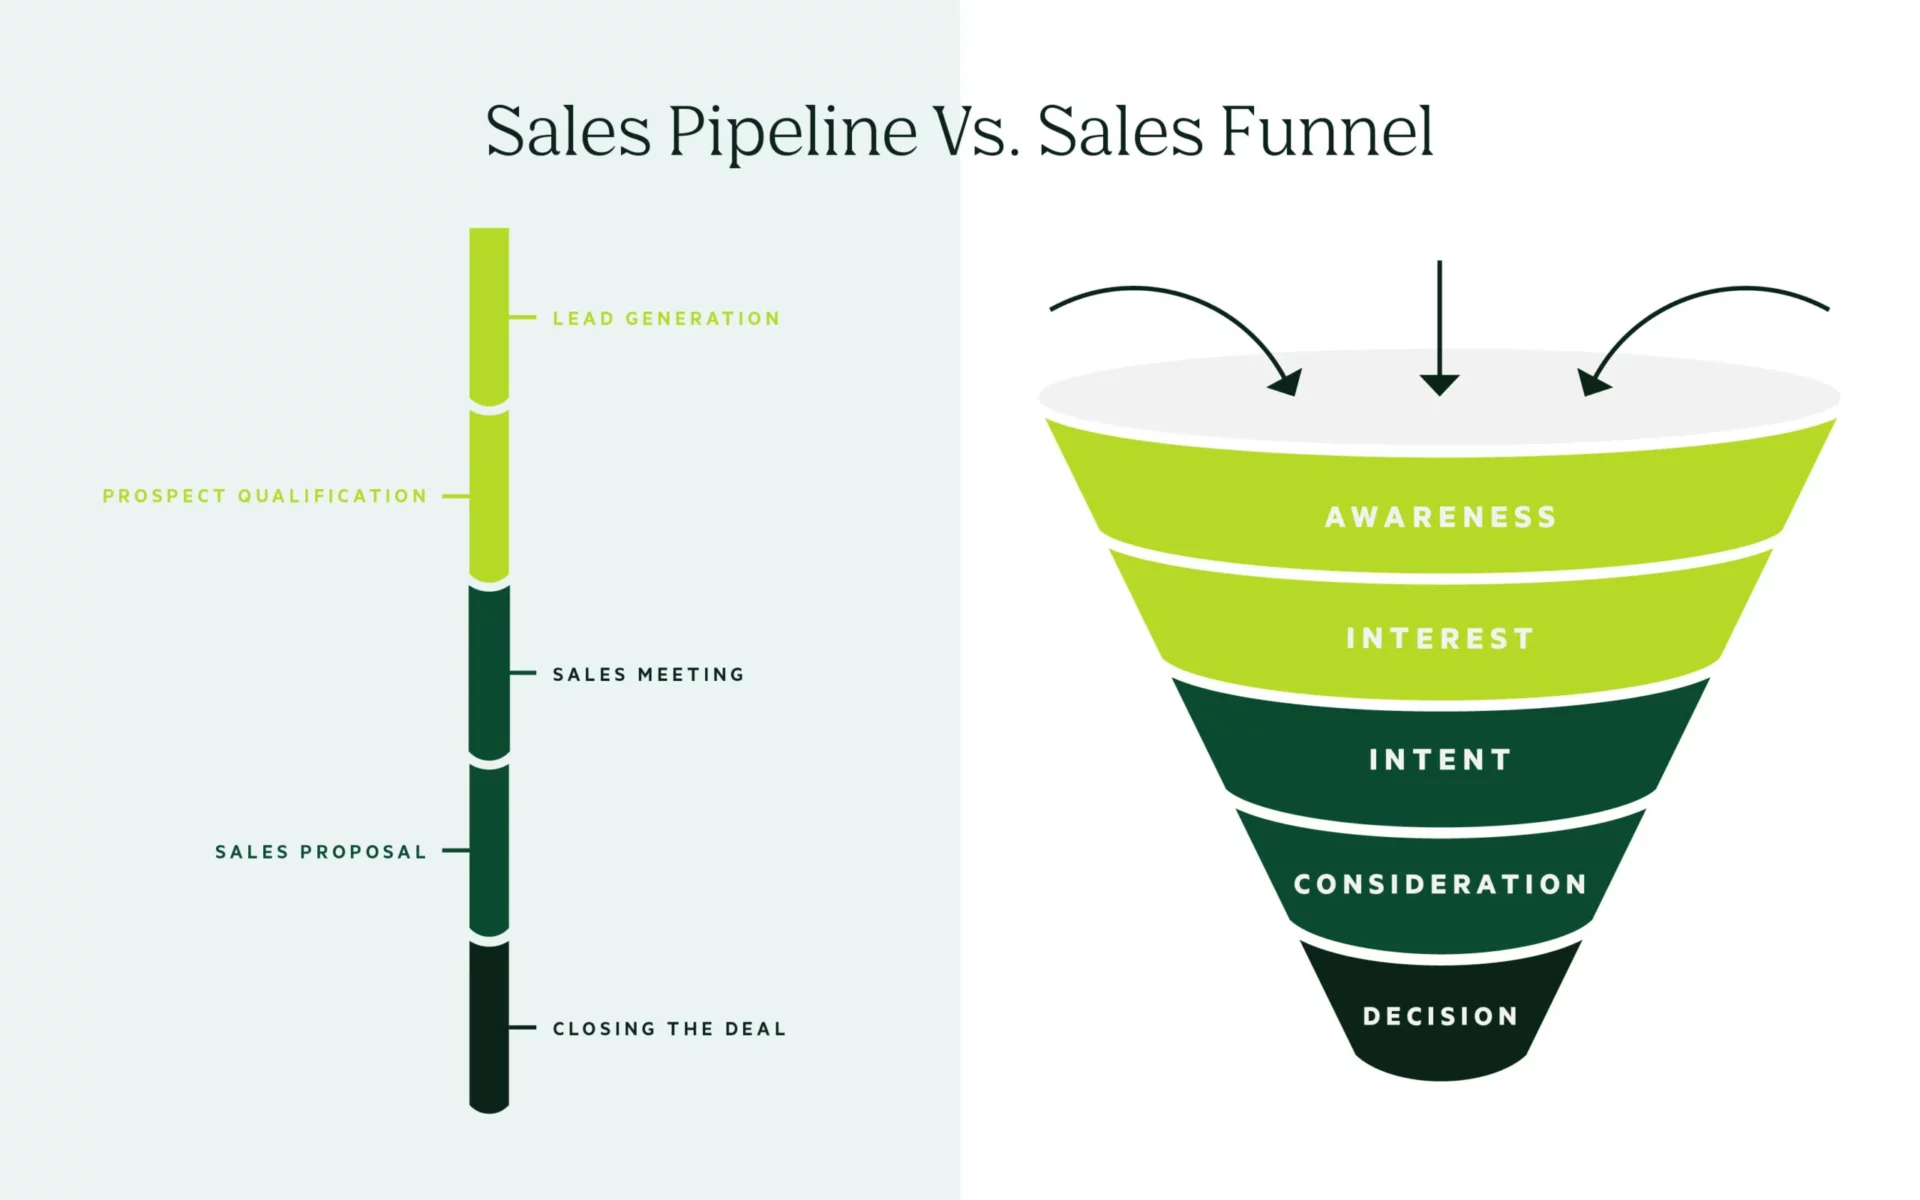 Sales pipeline VS Sales funnel